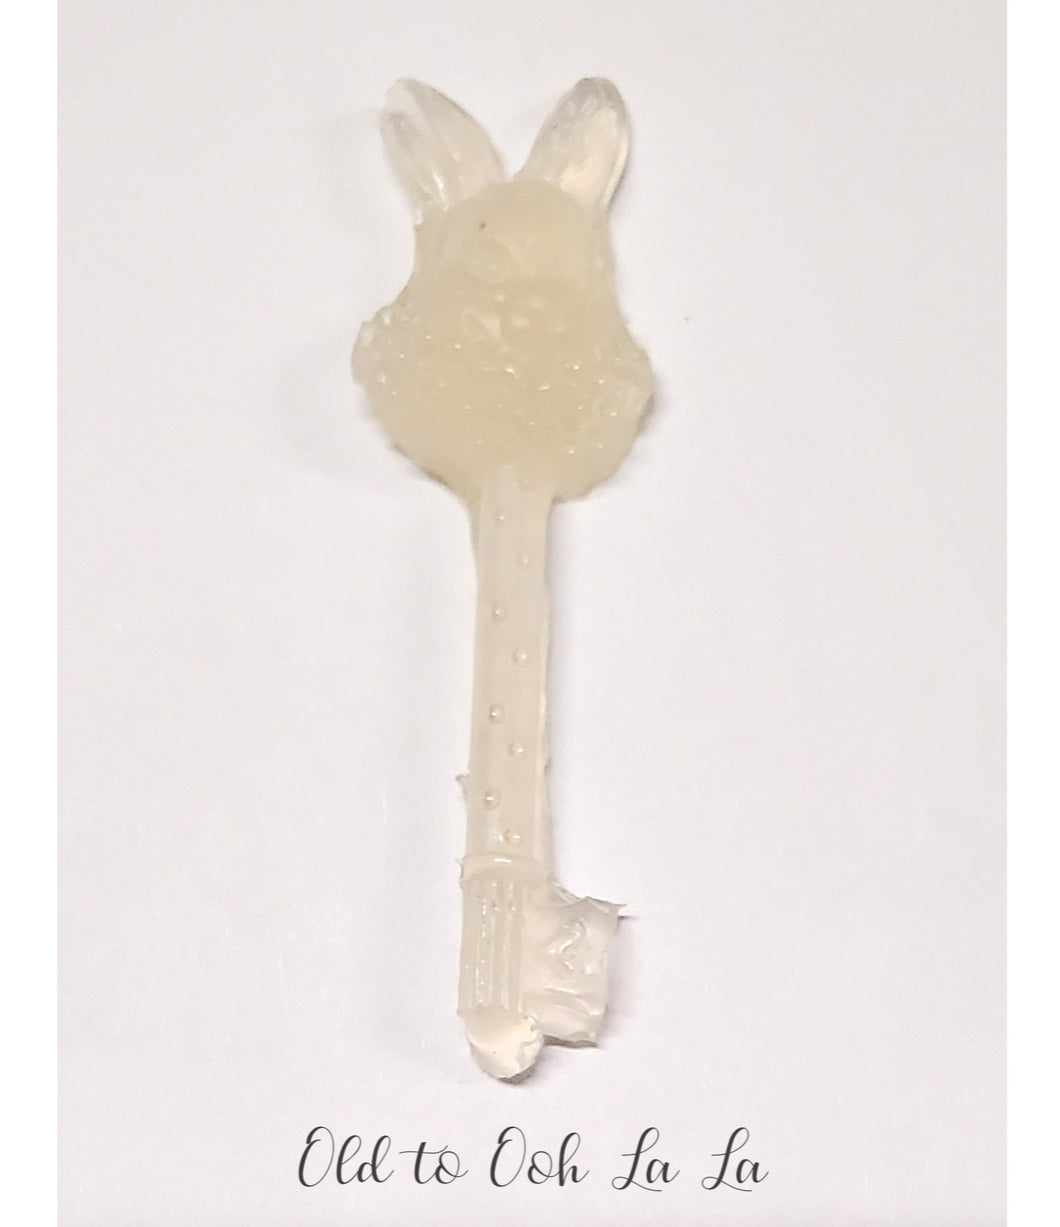 Bunny Key Mould (unpainted)